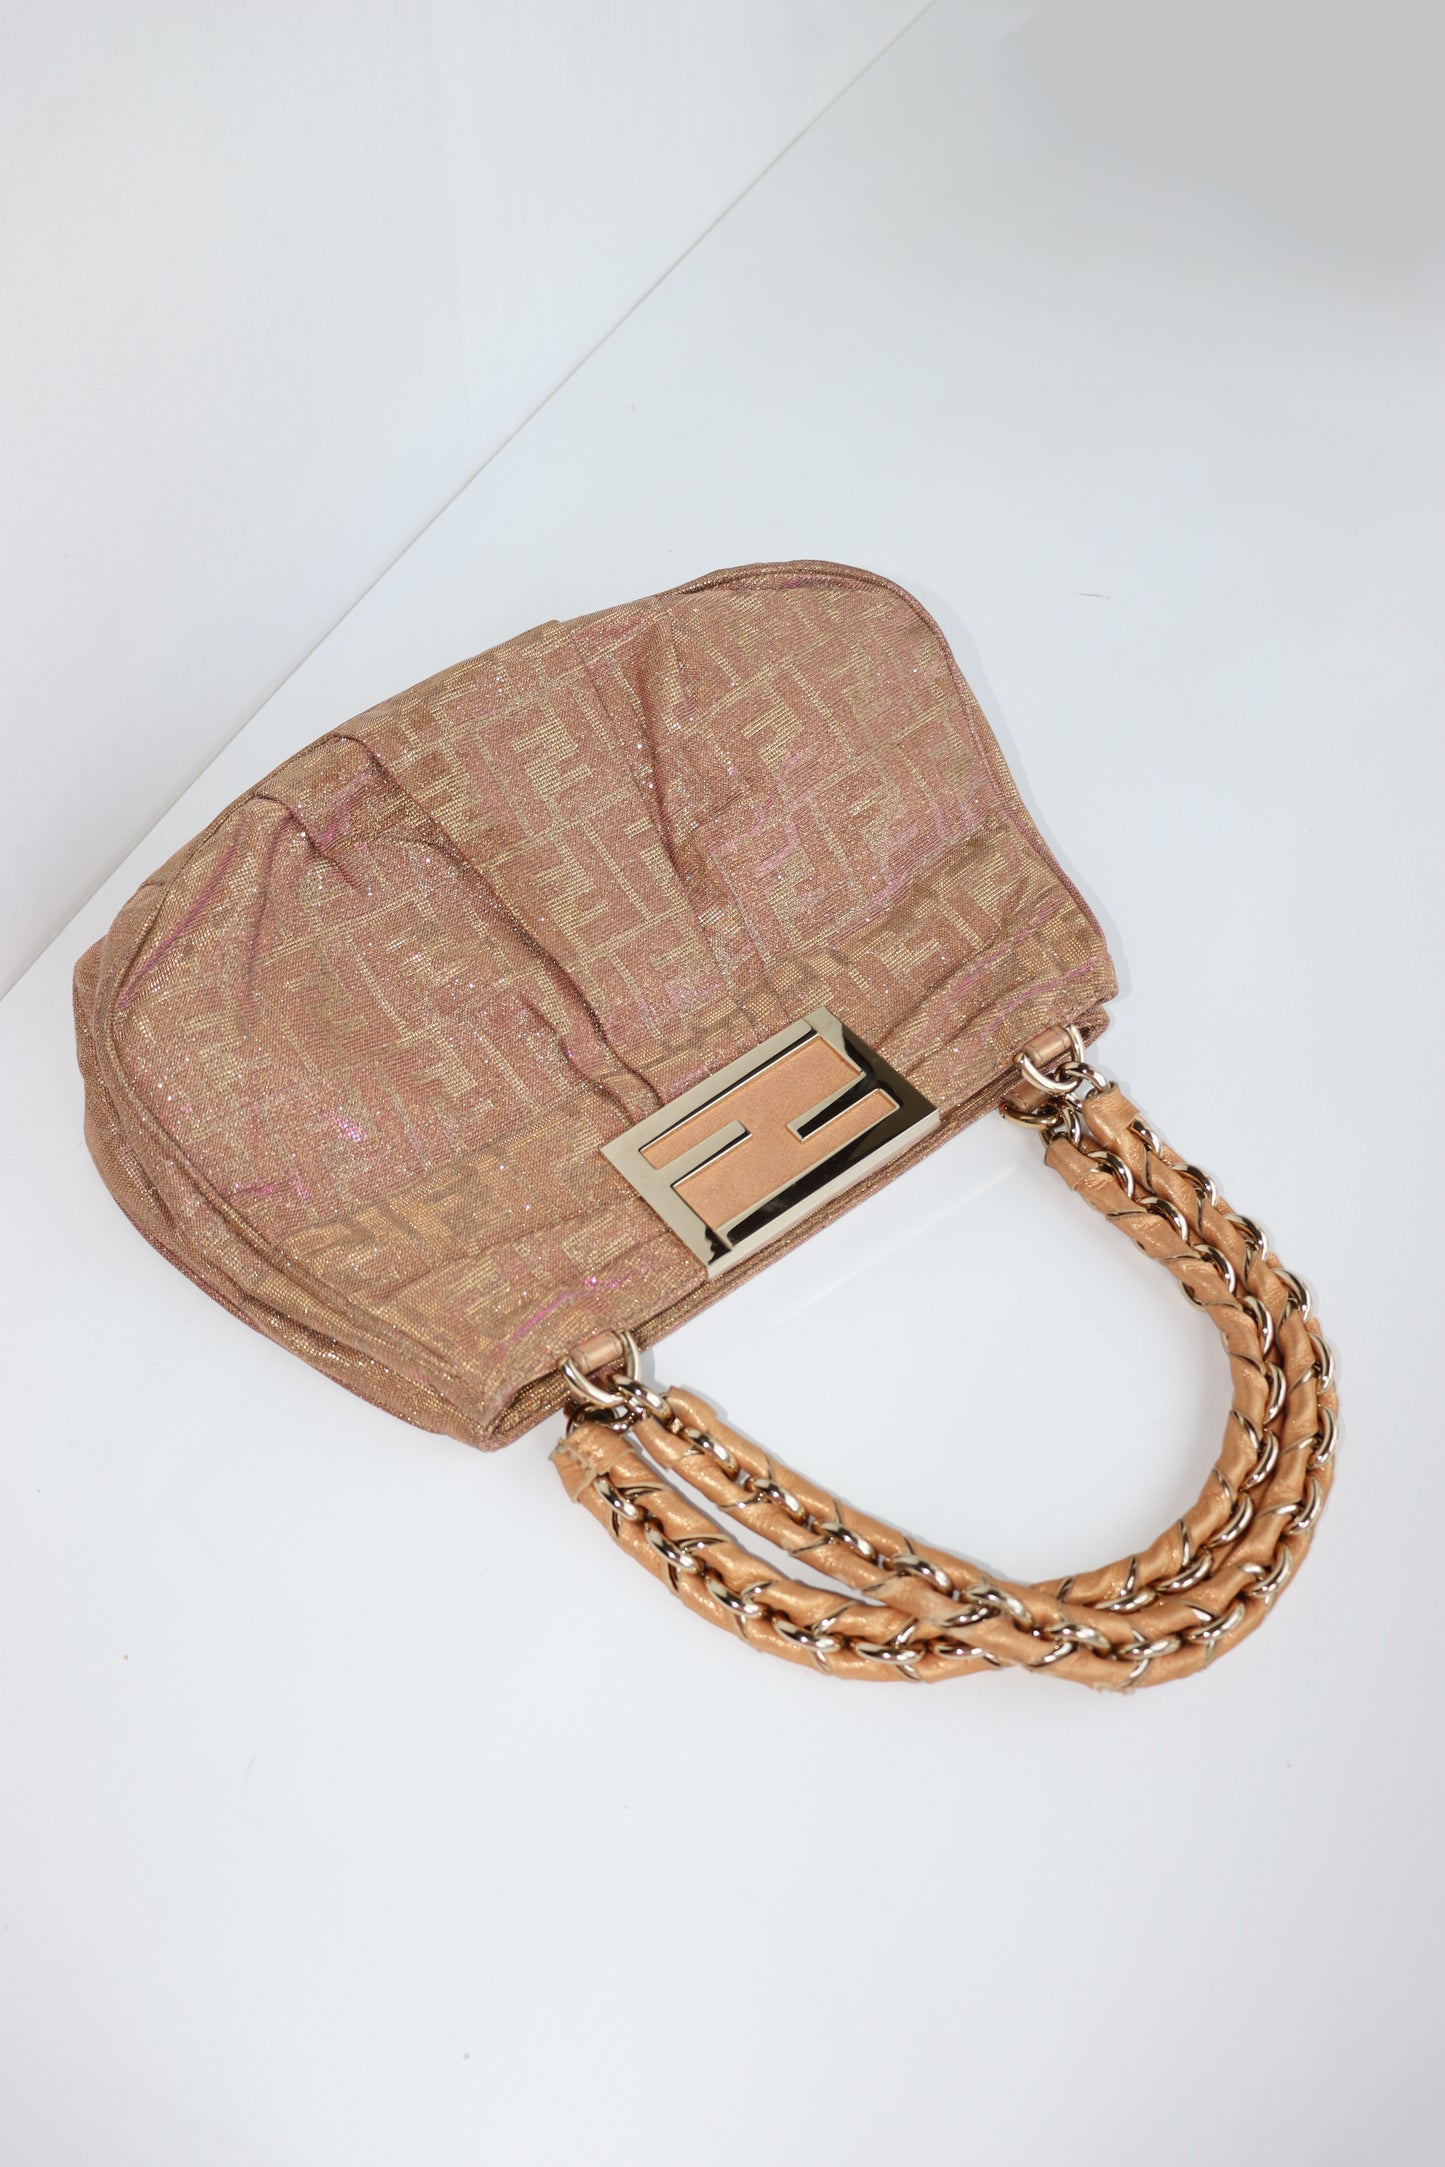 Vintage Fendi Mia Zucca Chain Bag 2000s